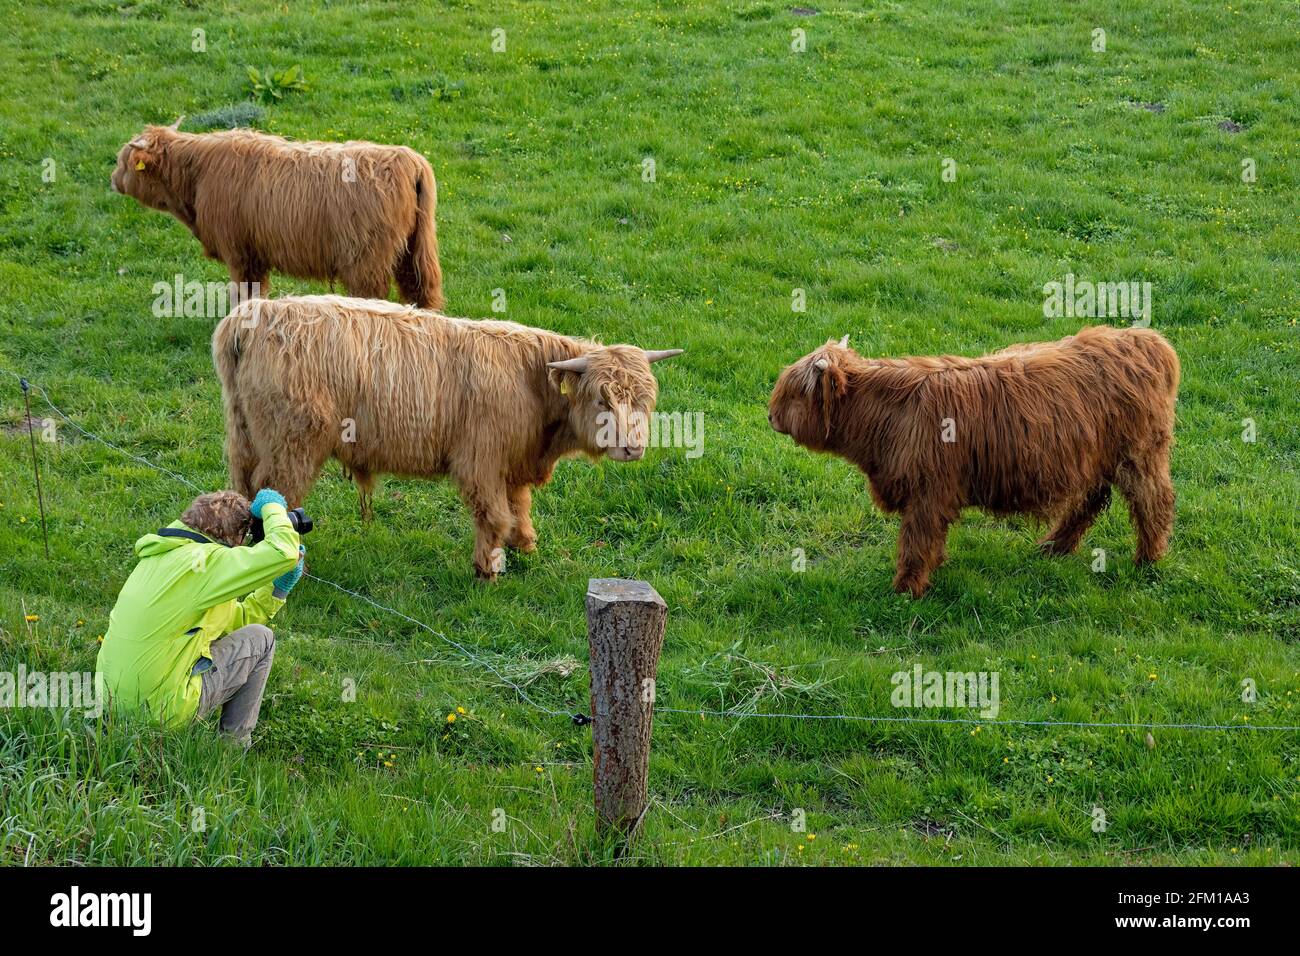 woman taking photos of Highland cattle, Goldhöft, Gelting Bay, Schleswig-Holstein, Germany Stock Photo